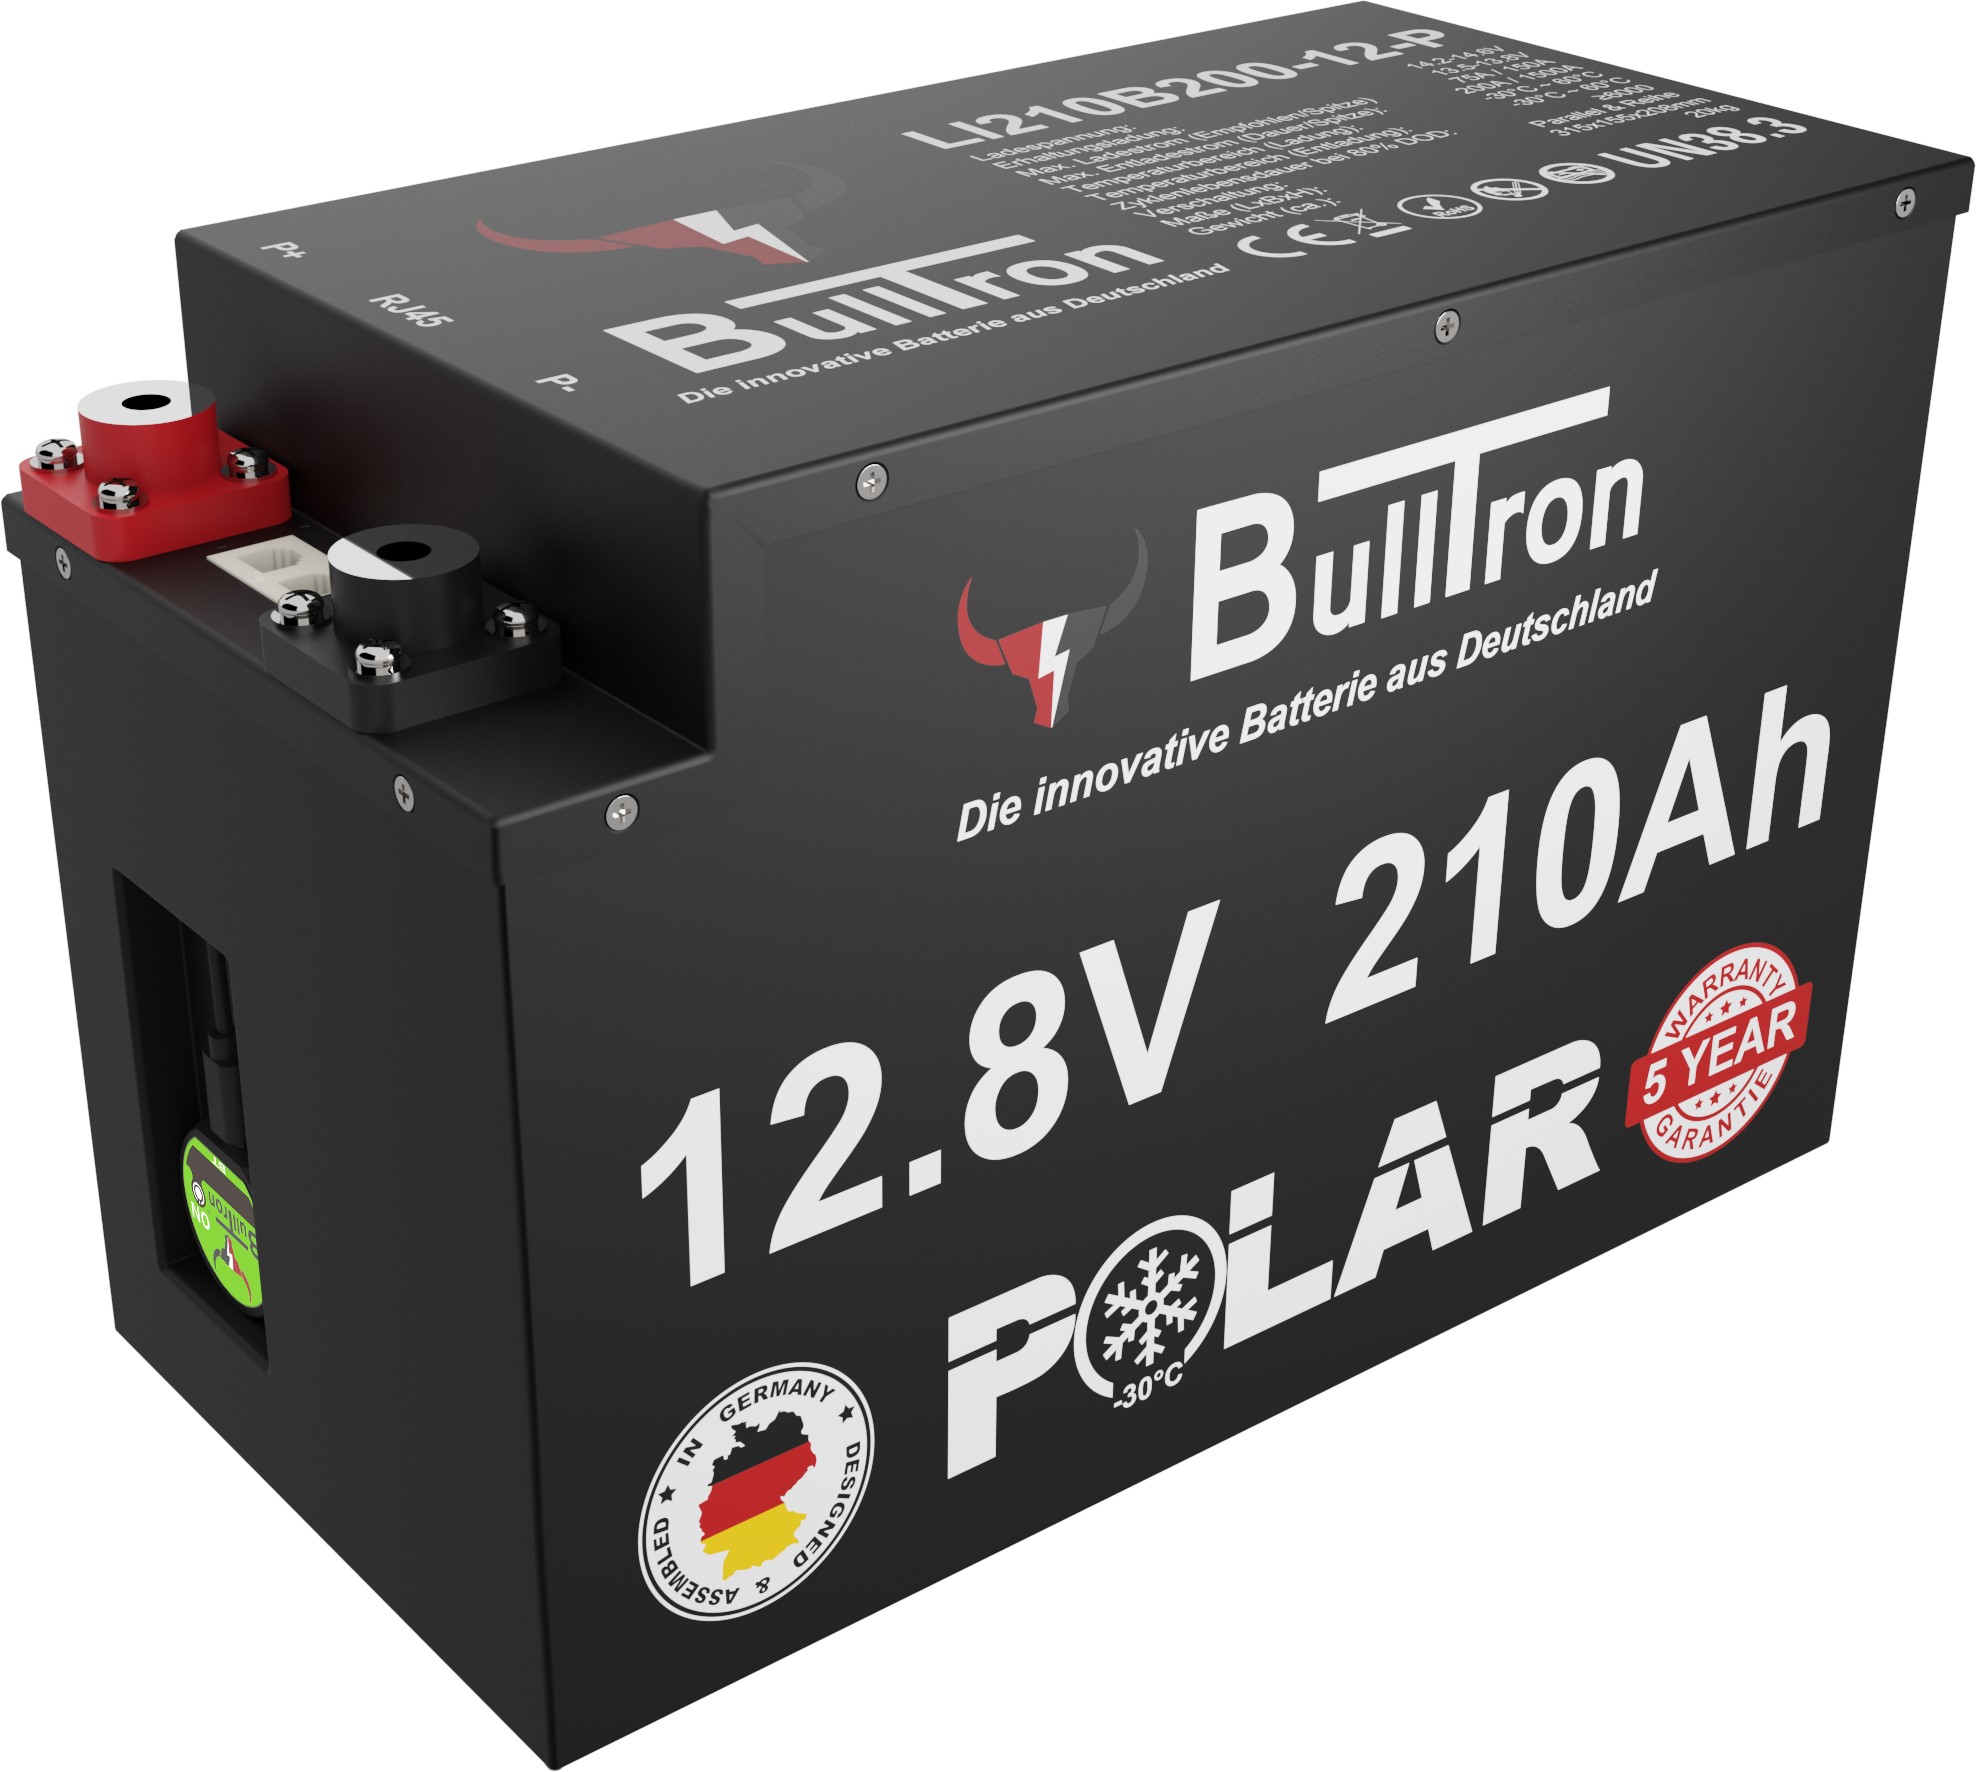 BullTron Batterie LiFePO4 300Ah 12.8V Polar Akku mit Smart BMS, Bluetooth  App und Heizung